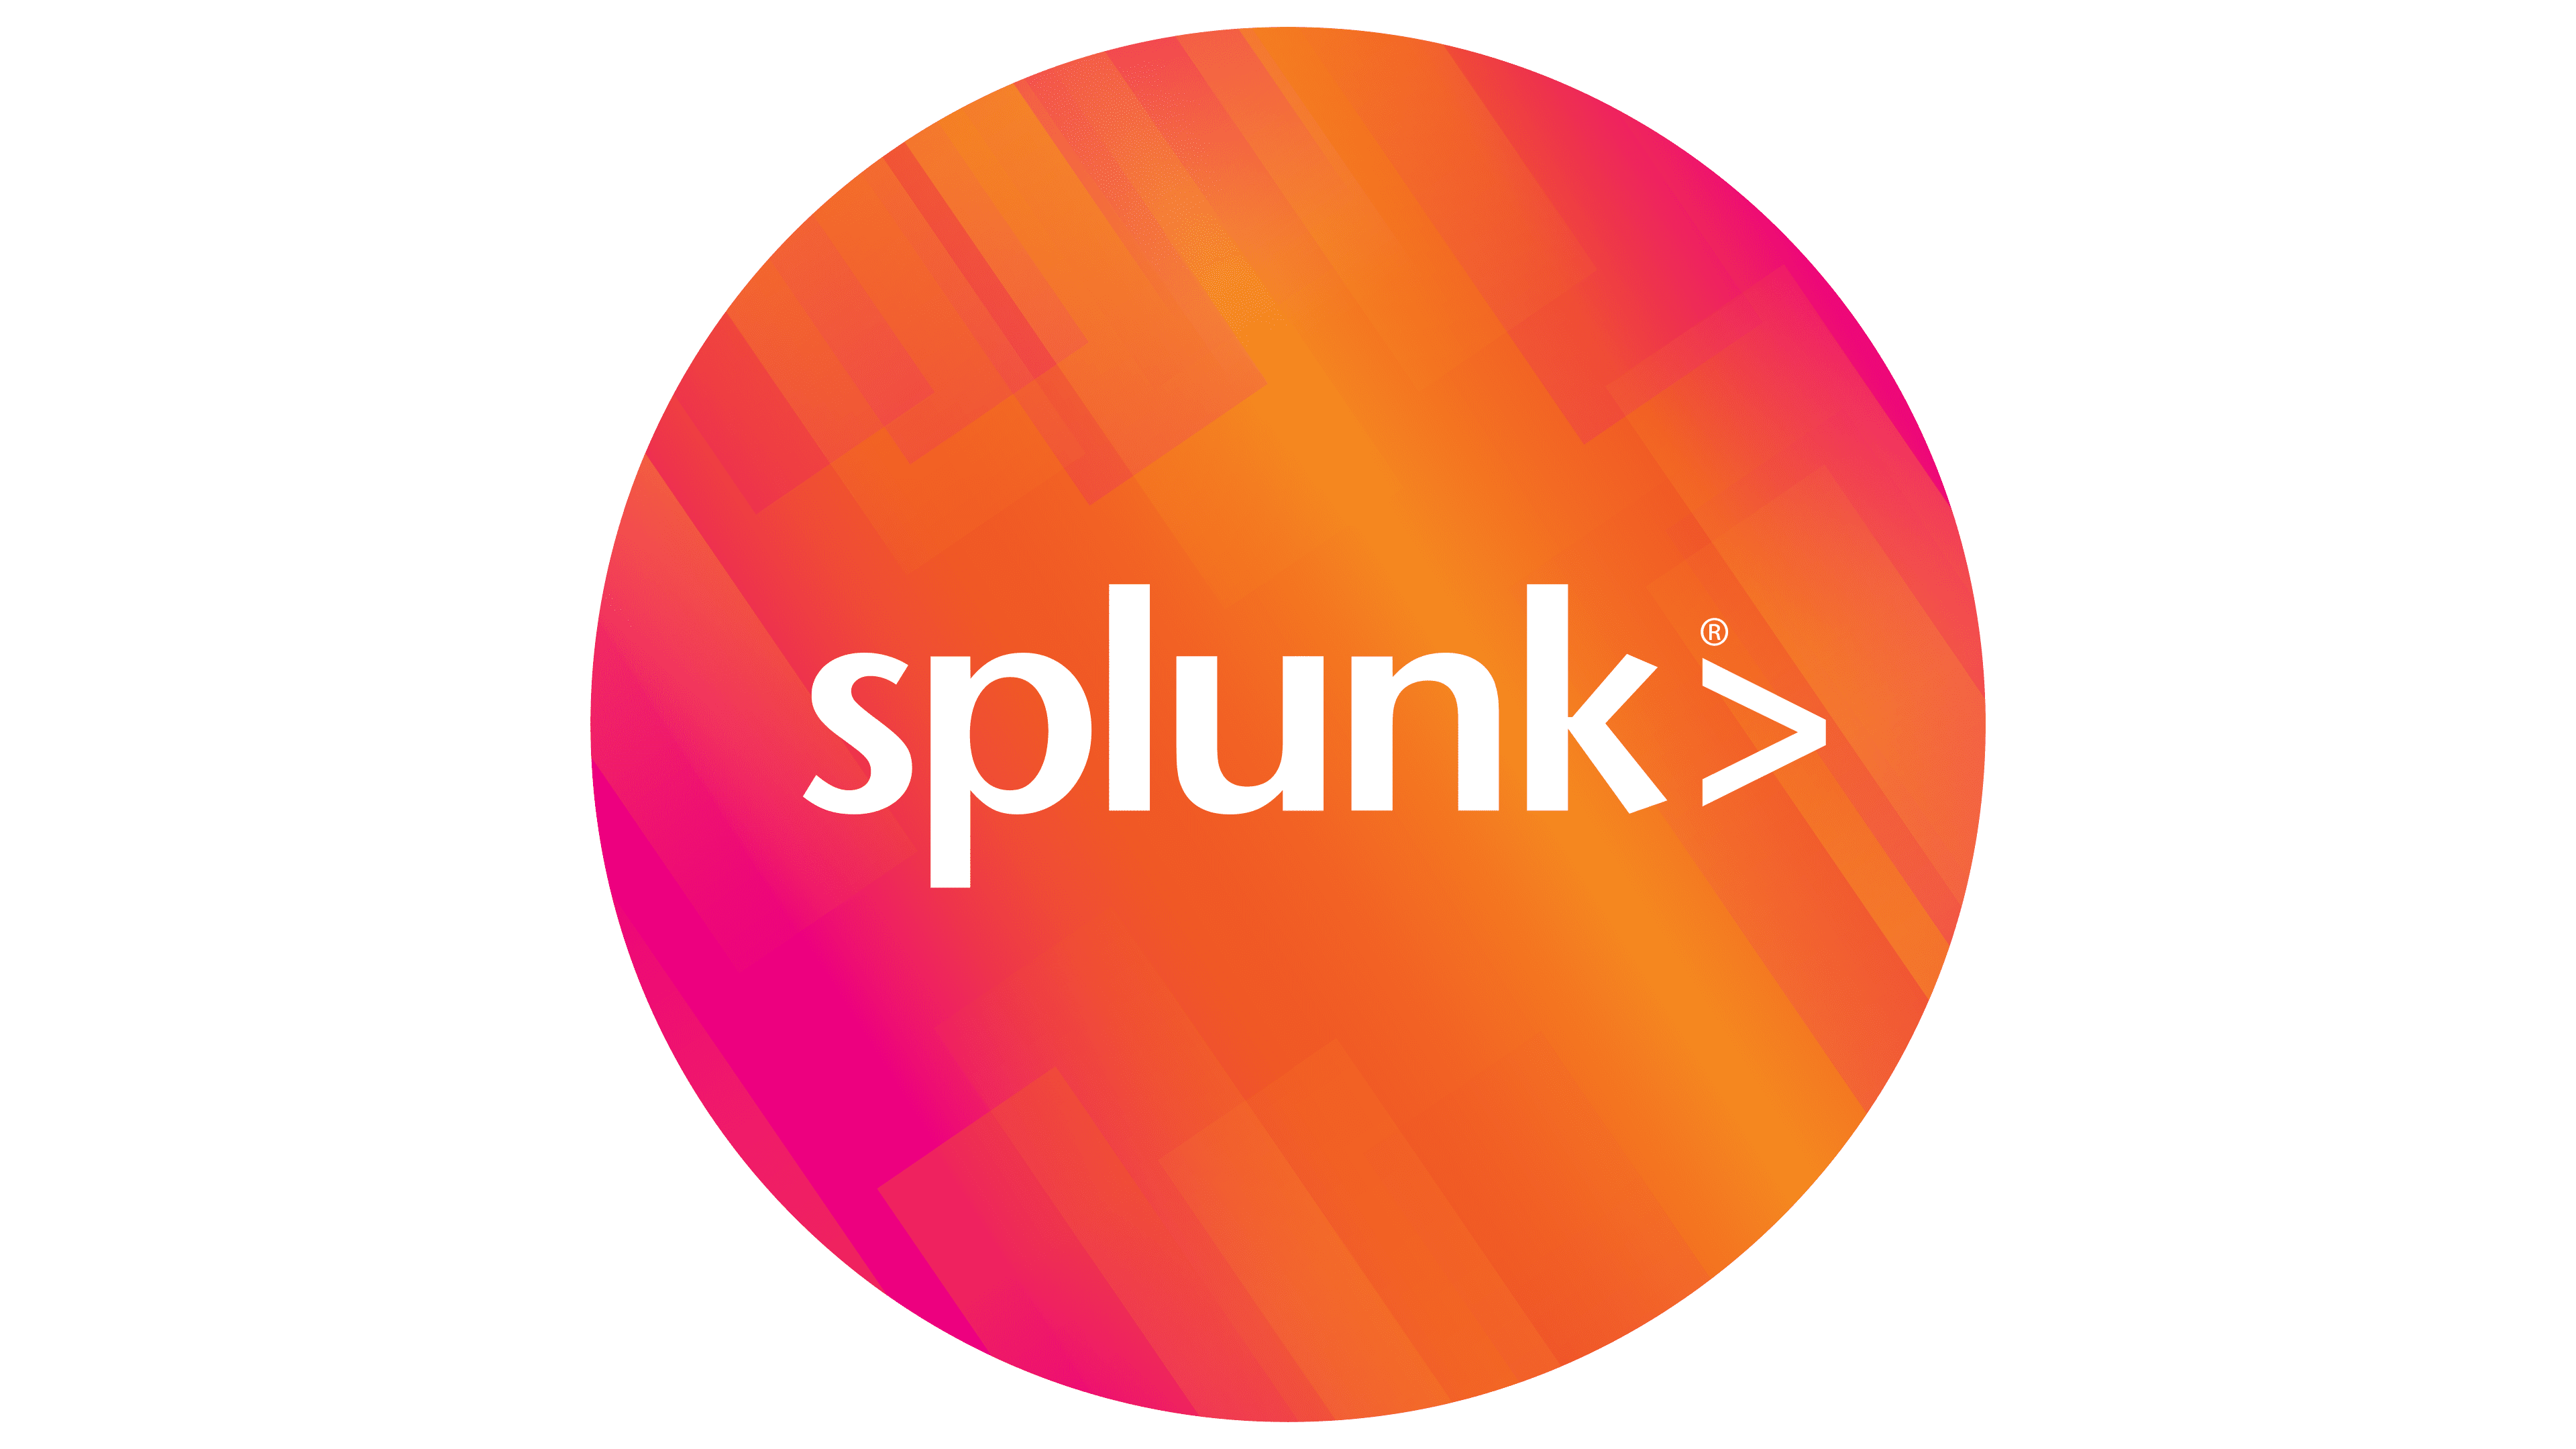 SPLUNK users